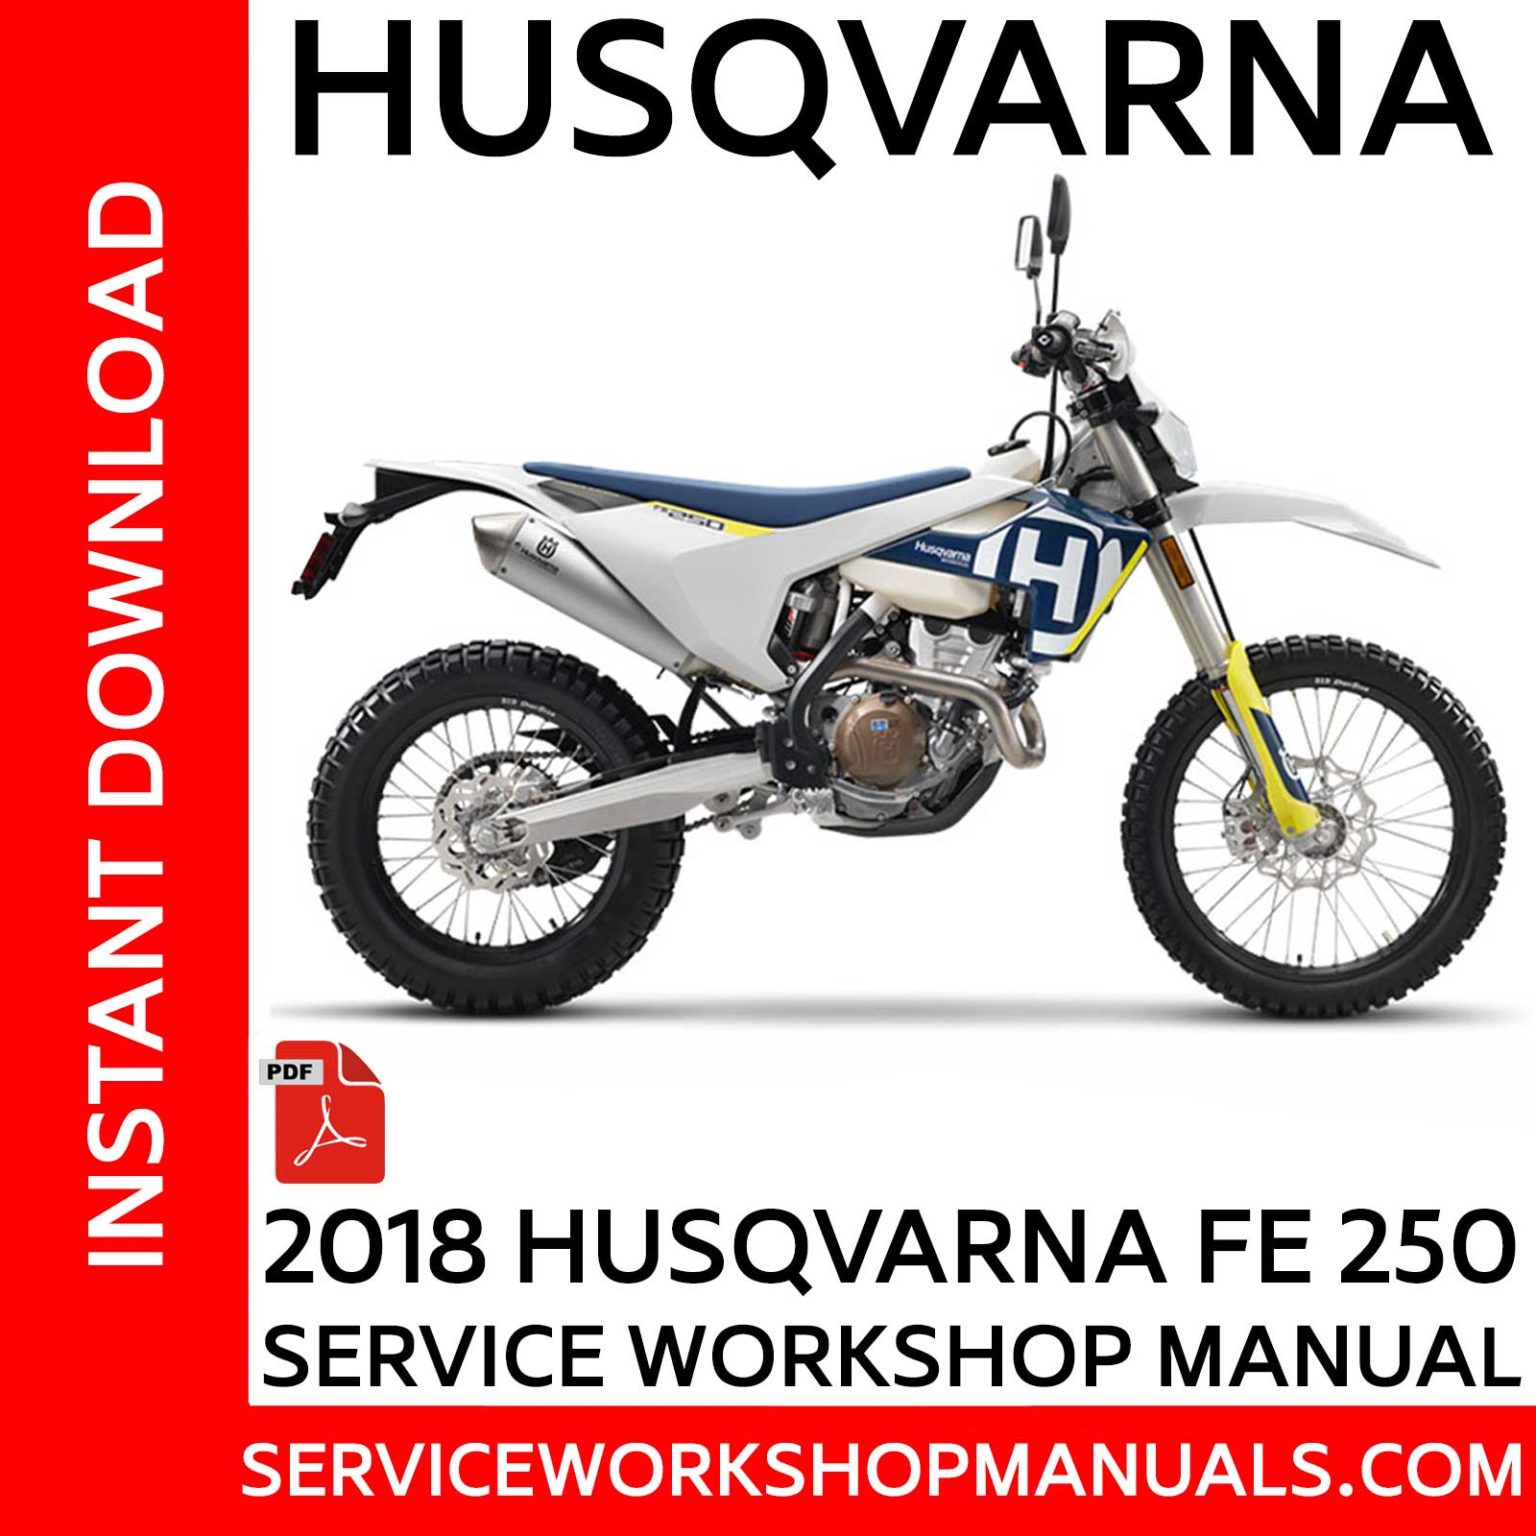 Husqvarna FE 450 | 501 | S 2014-2019 Service Workshop Manual - Service